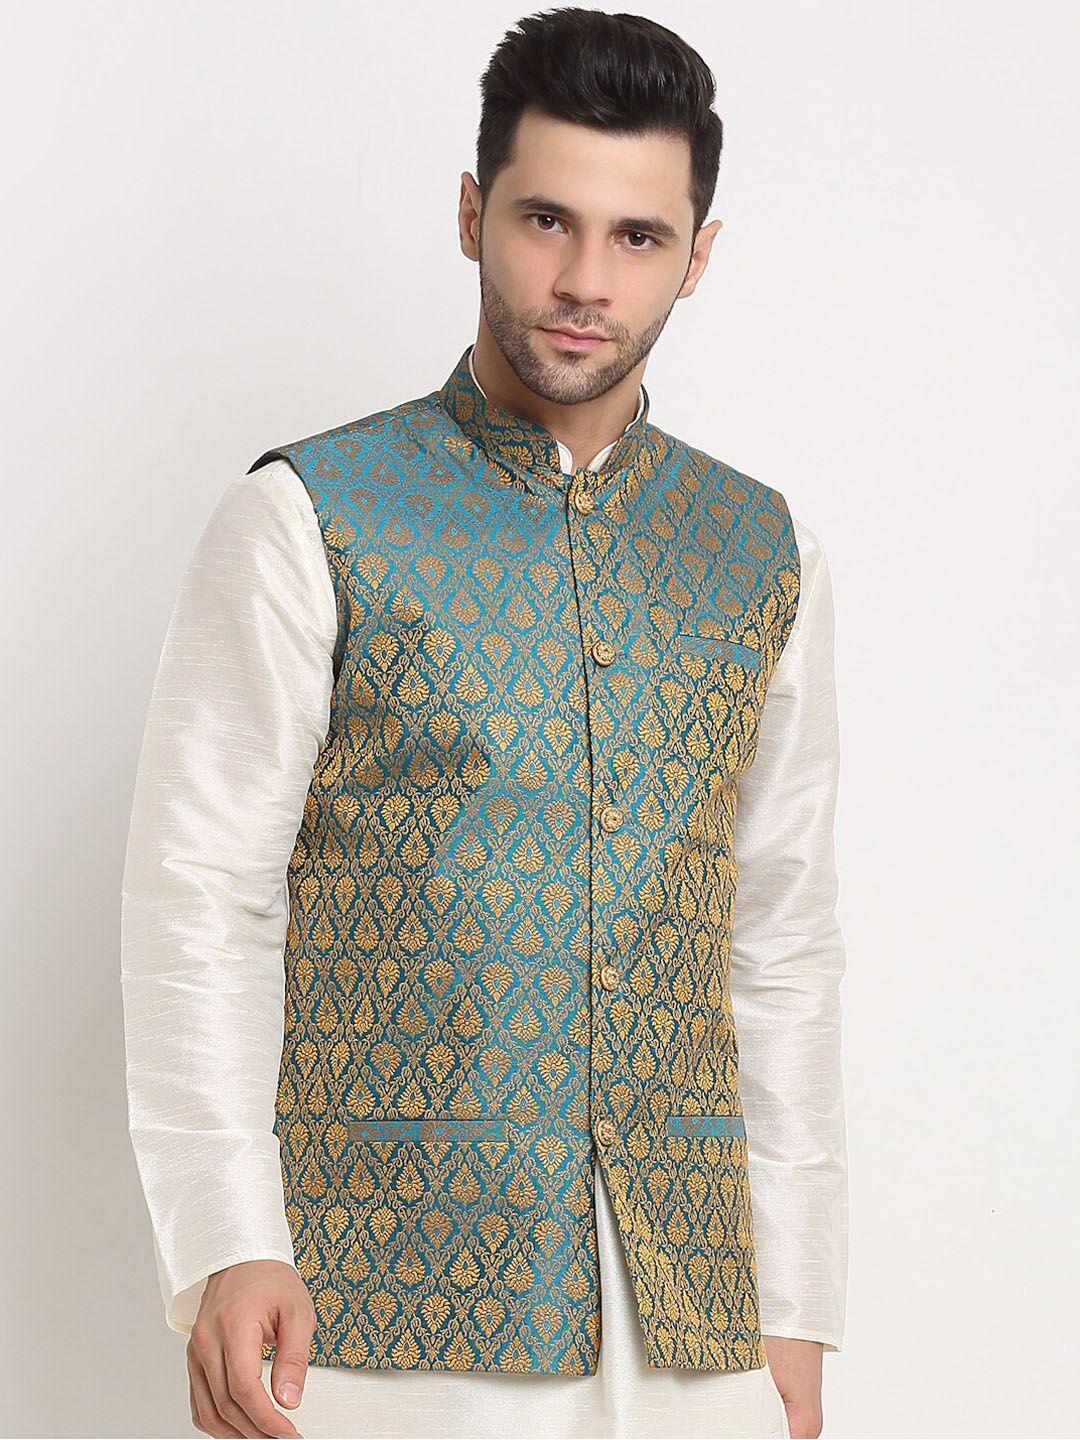 kraft india men blue jacquard woven design jacket